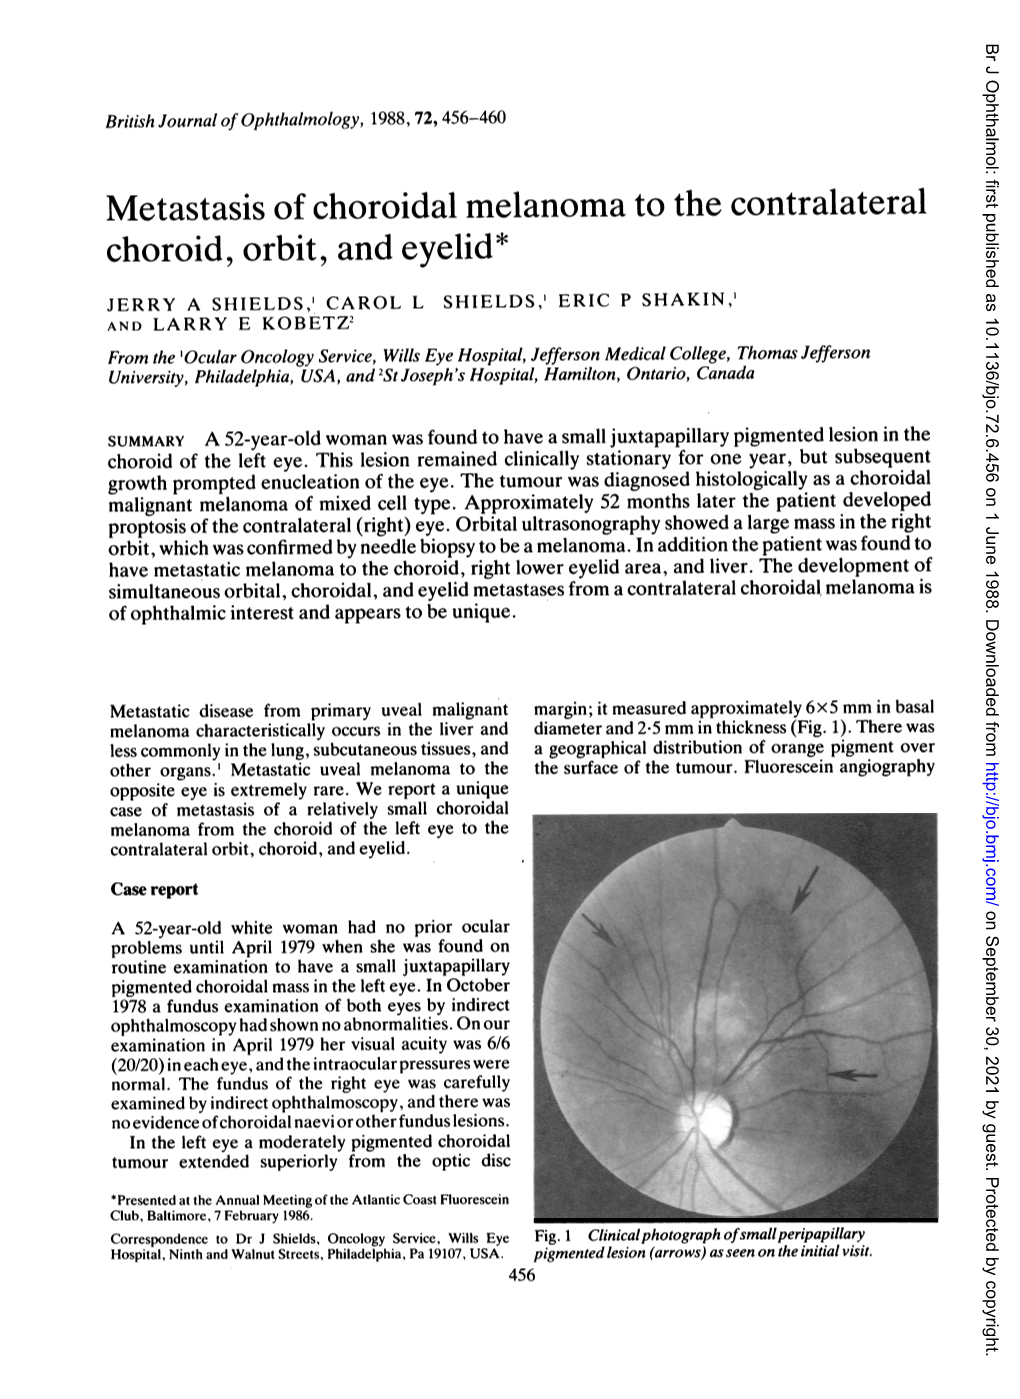 Choroid, Orbit, and Eyelid*